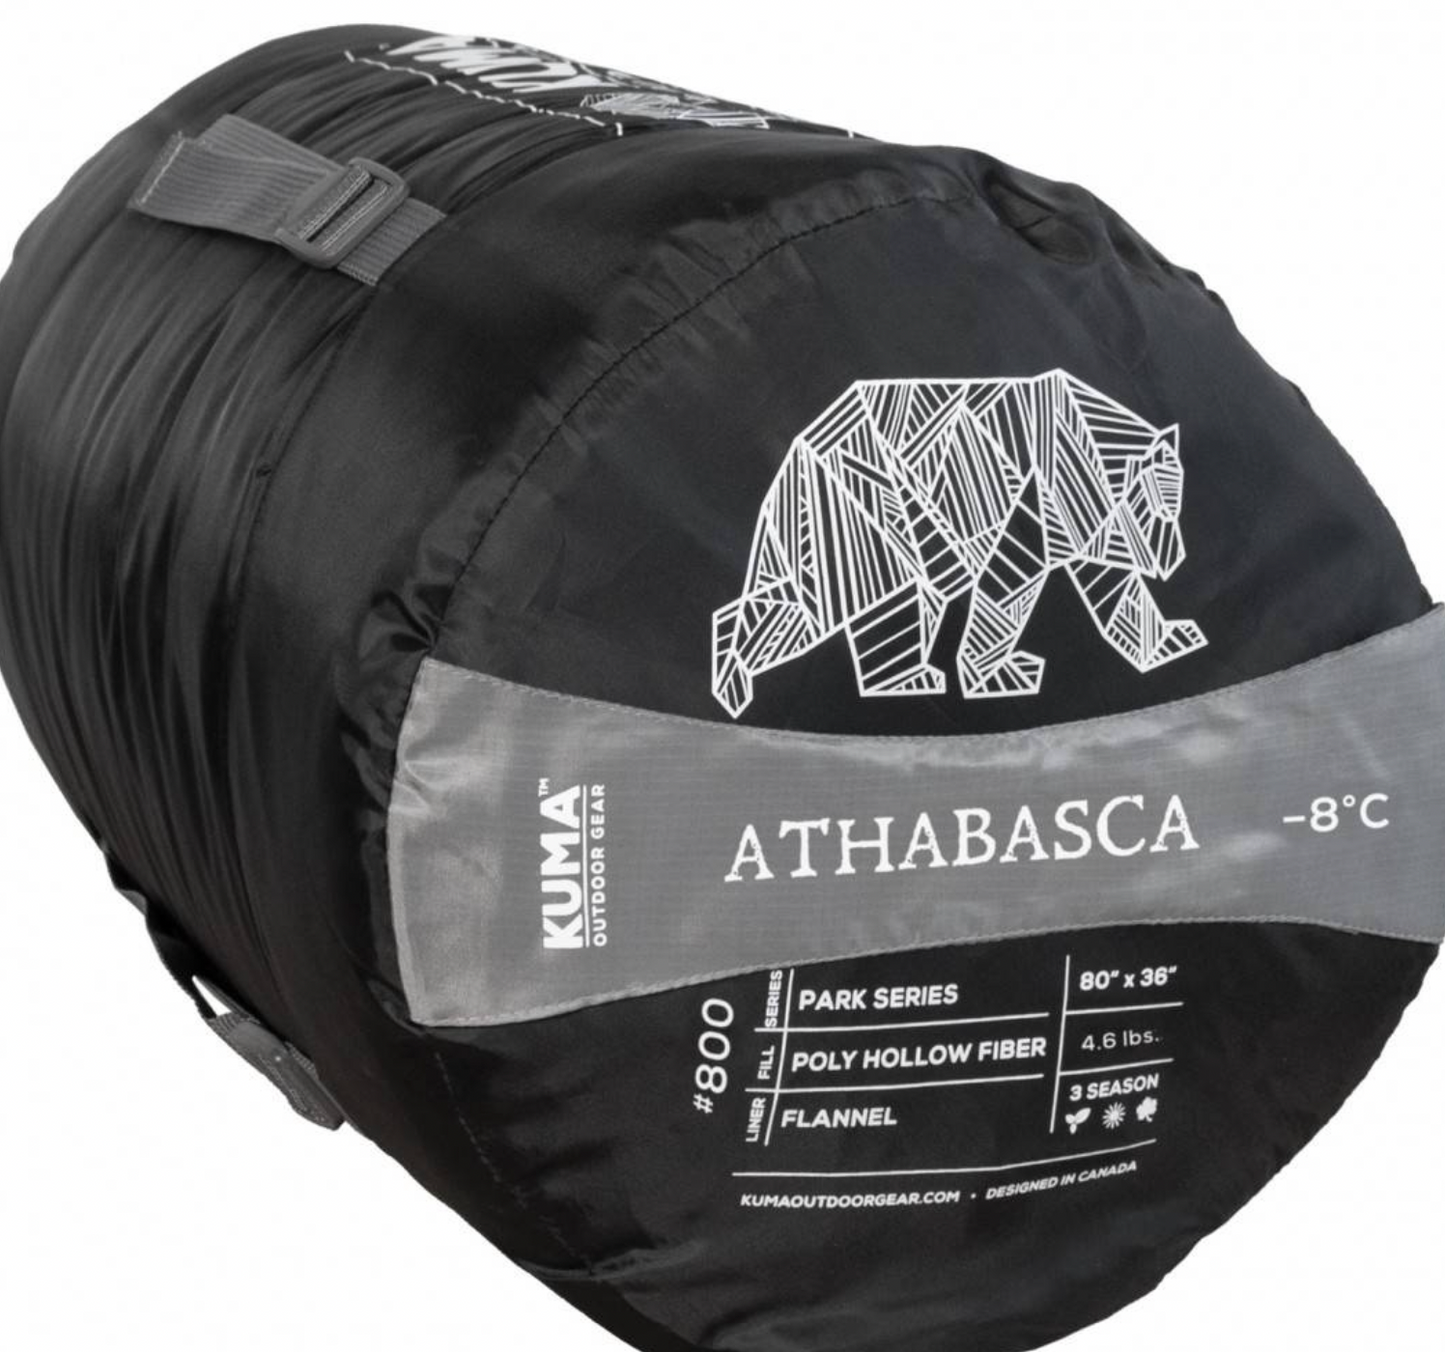 KUMA Athabasca Sleeping Bag